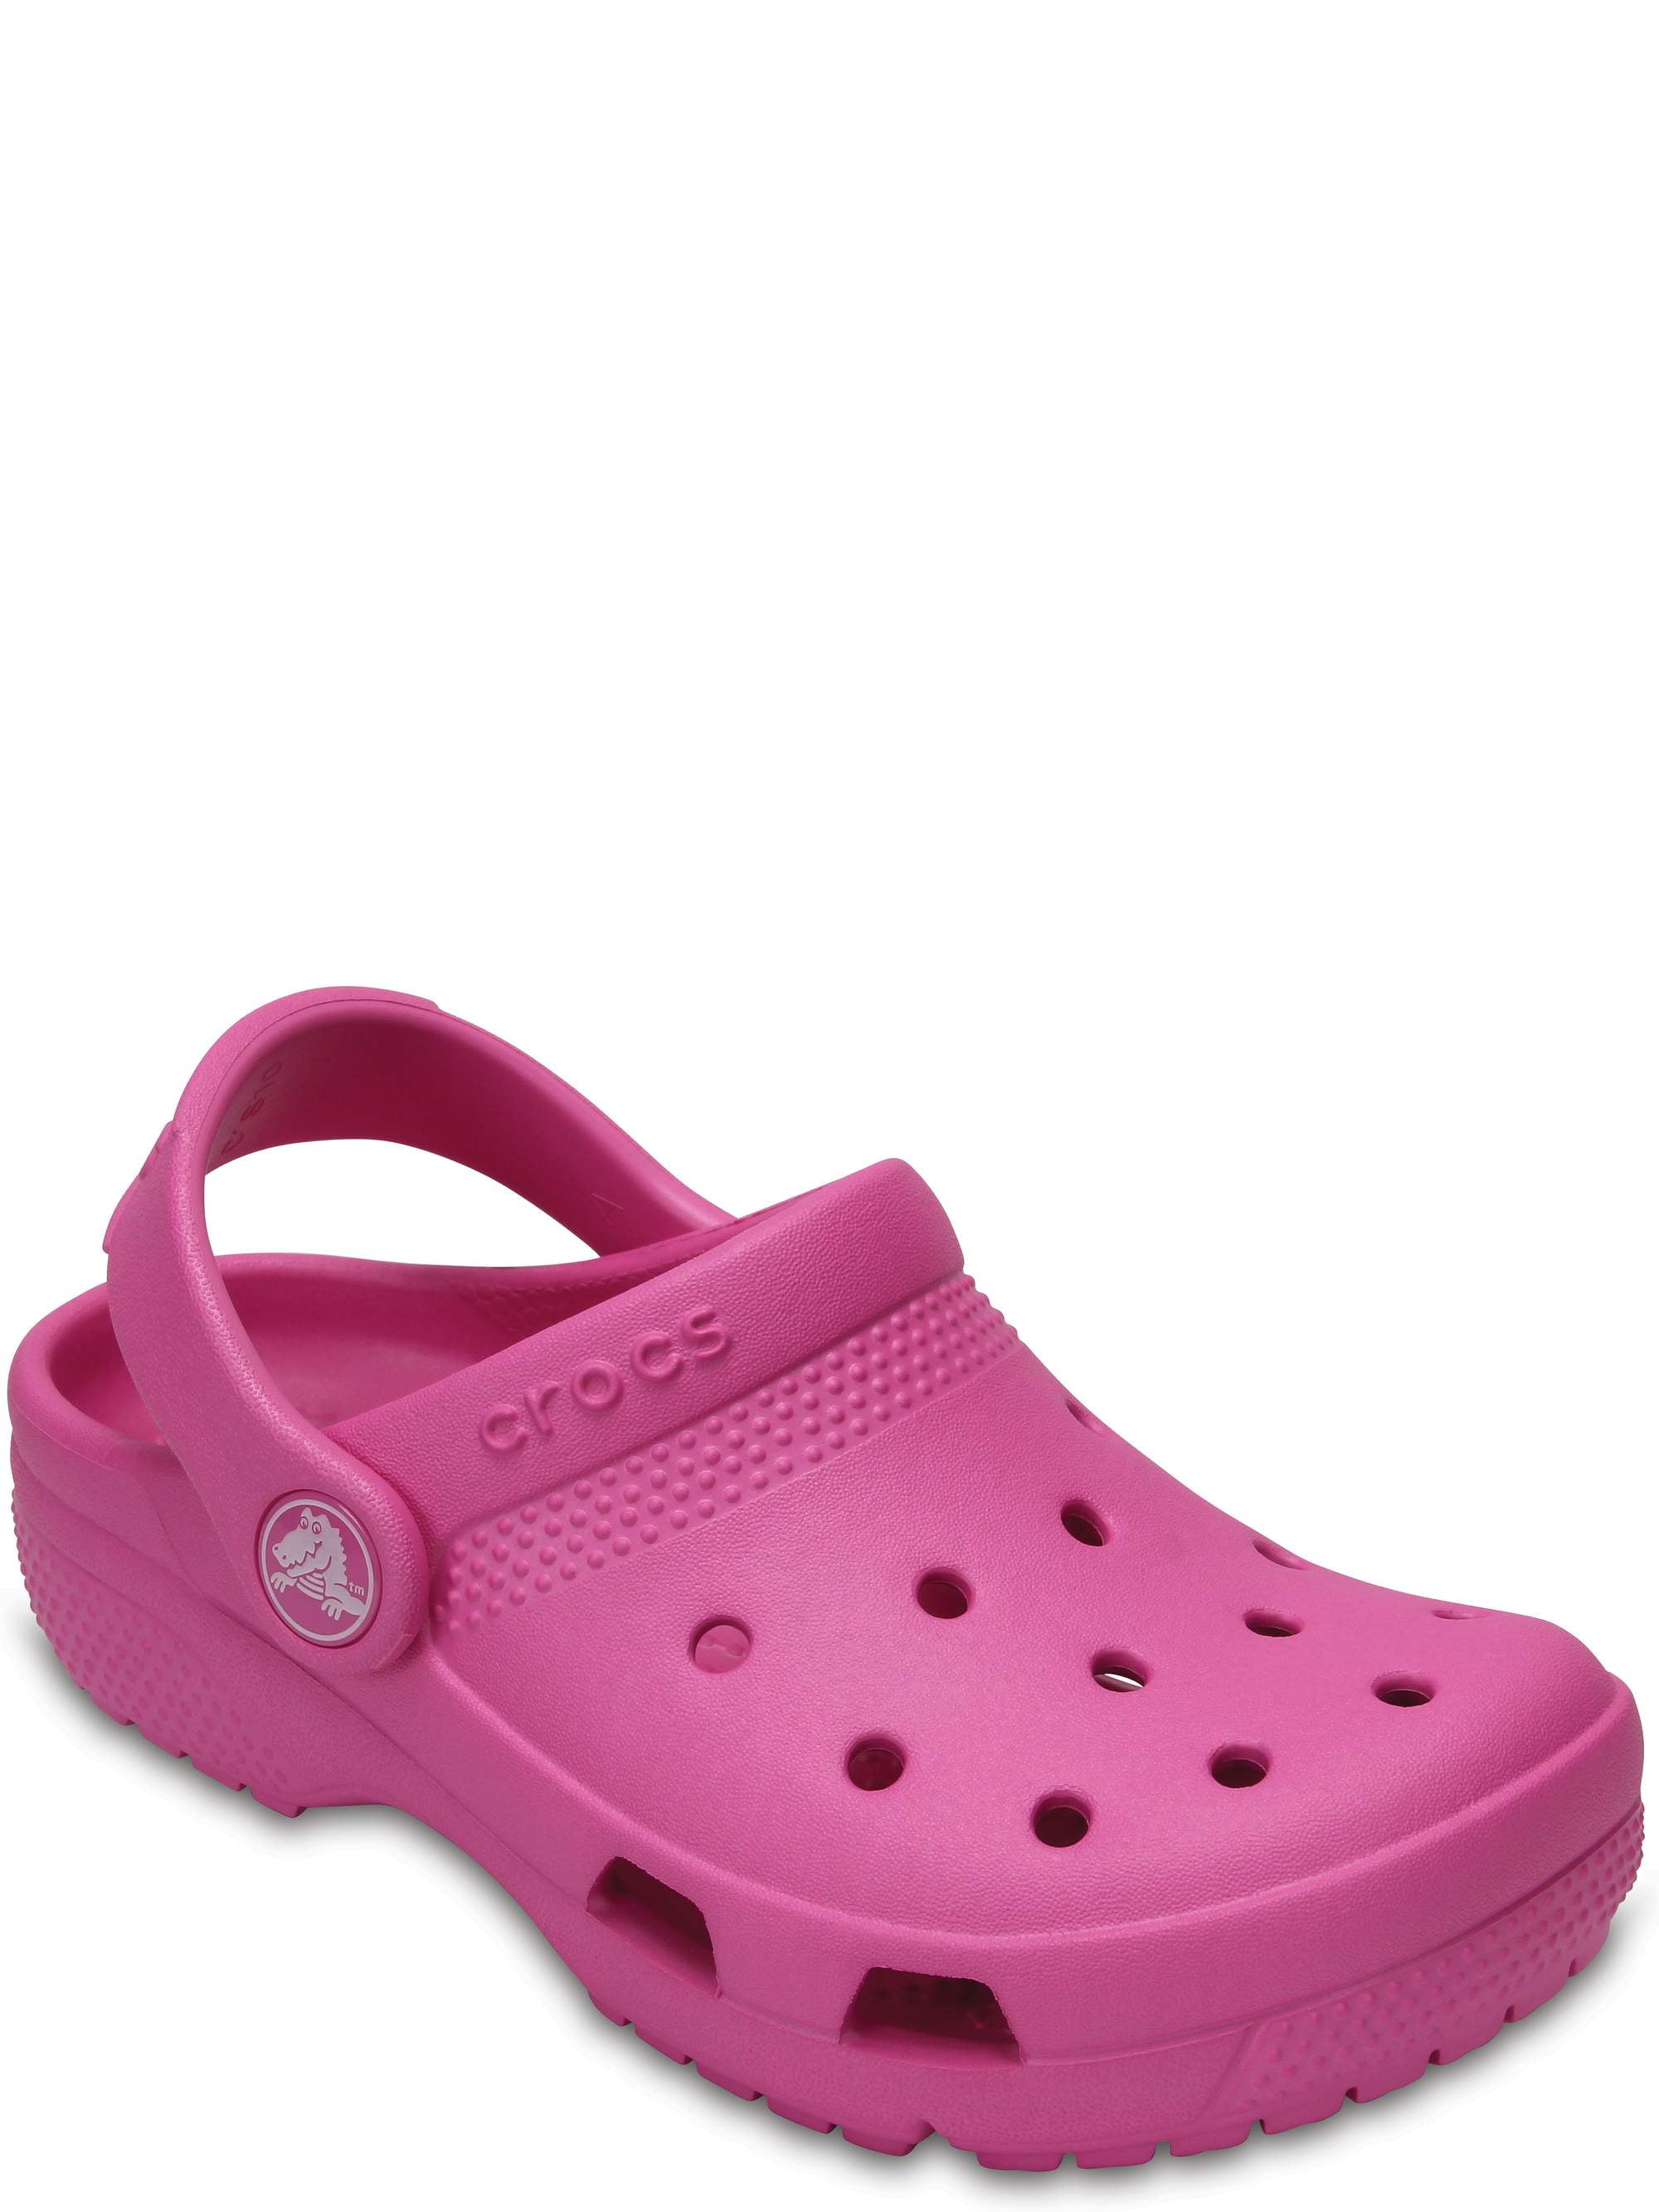 Crocs Kids \u0026 Baby Shoes - Walmart.com